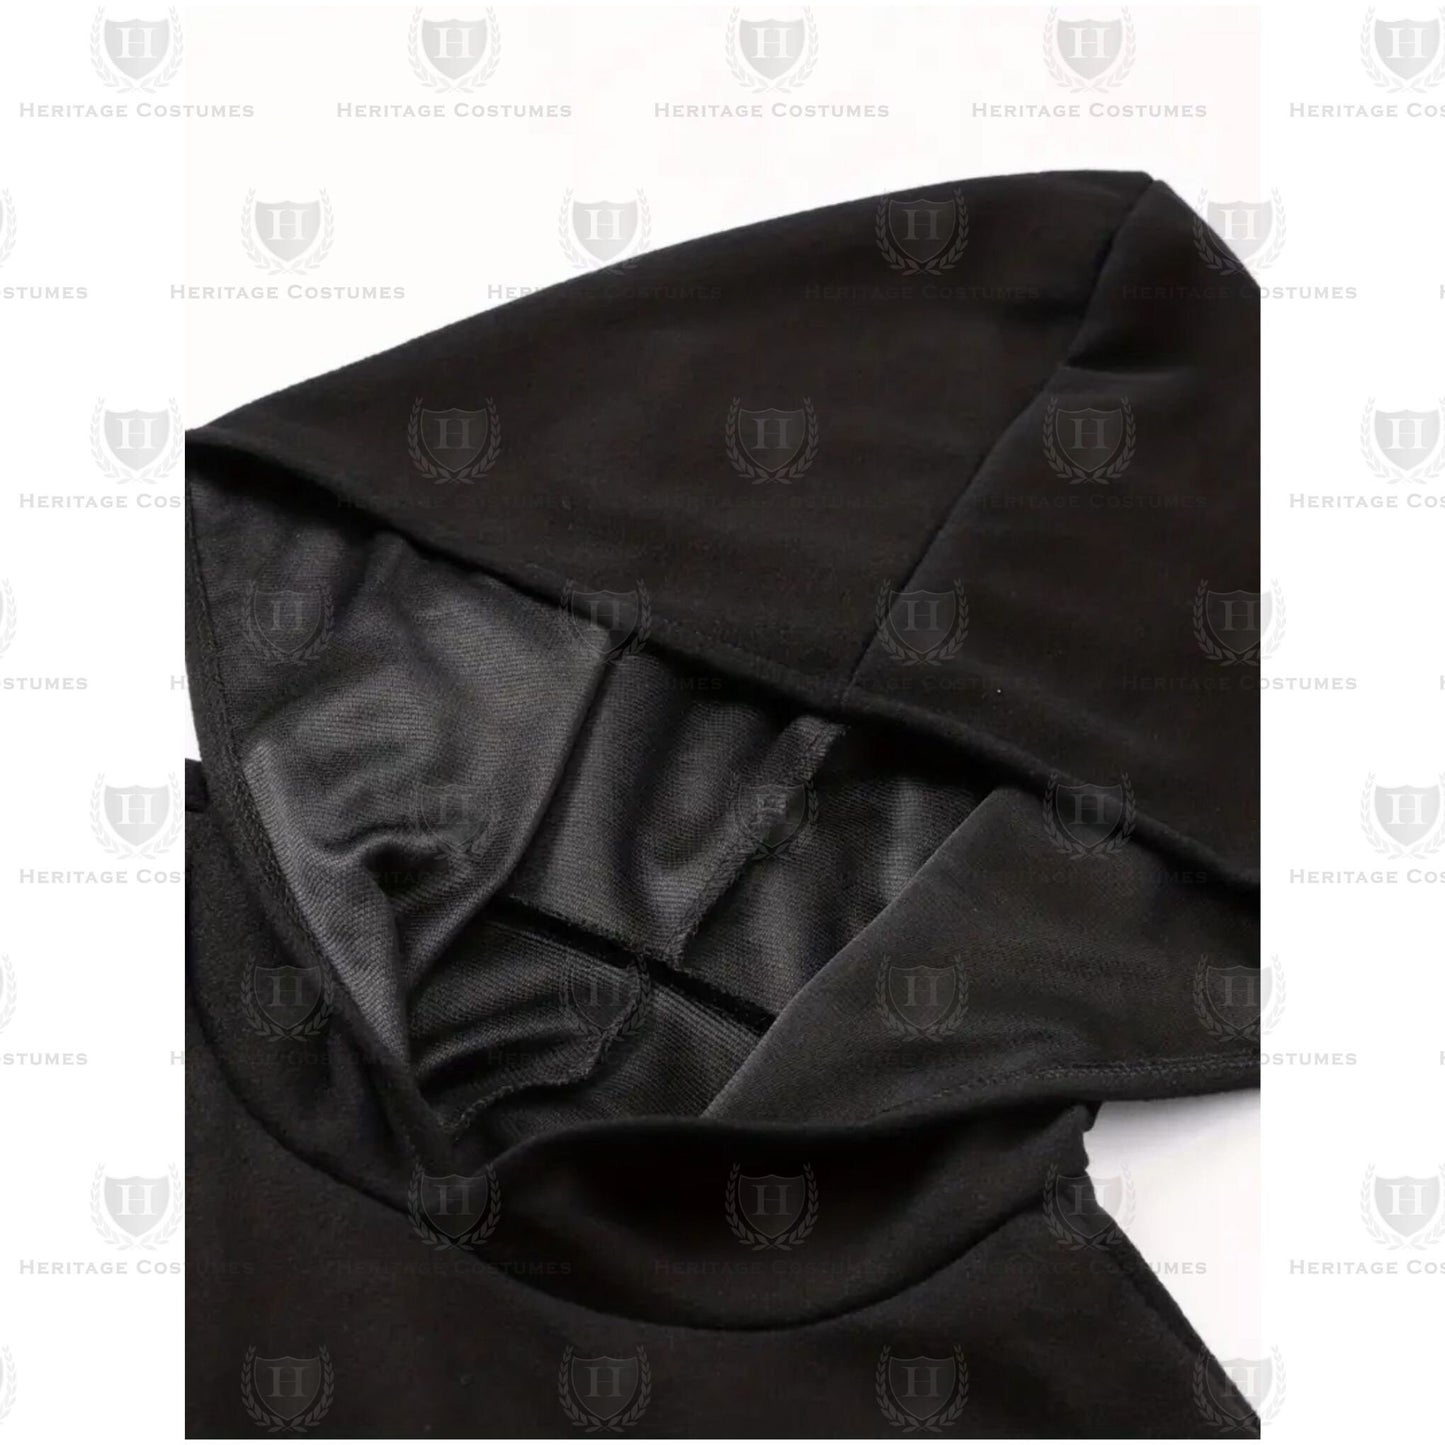 Hooded Medieval Cloak, Renaissance SCA LARP Cloak, Wizard Robe